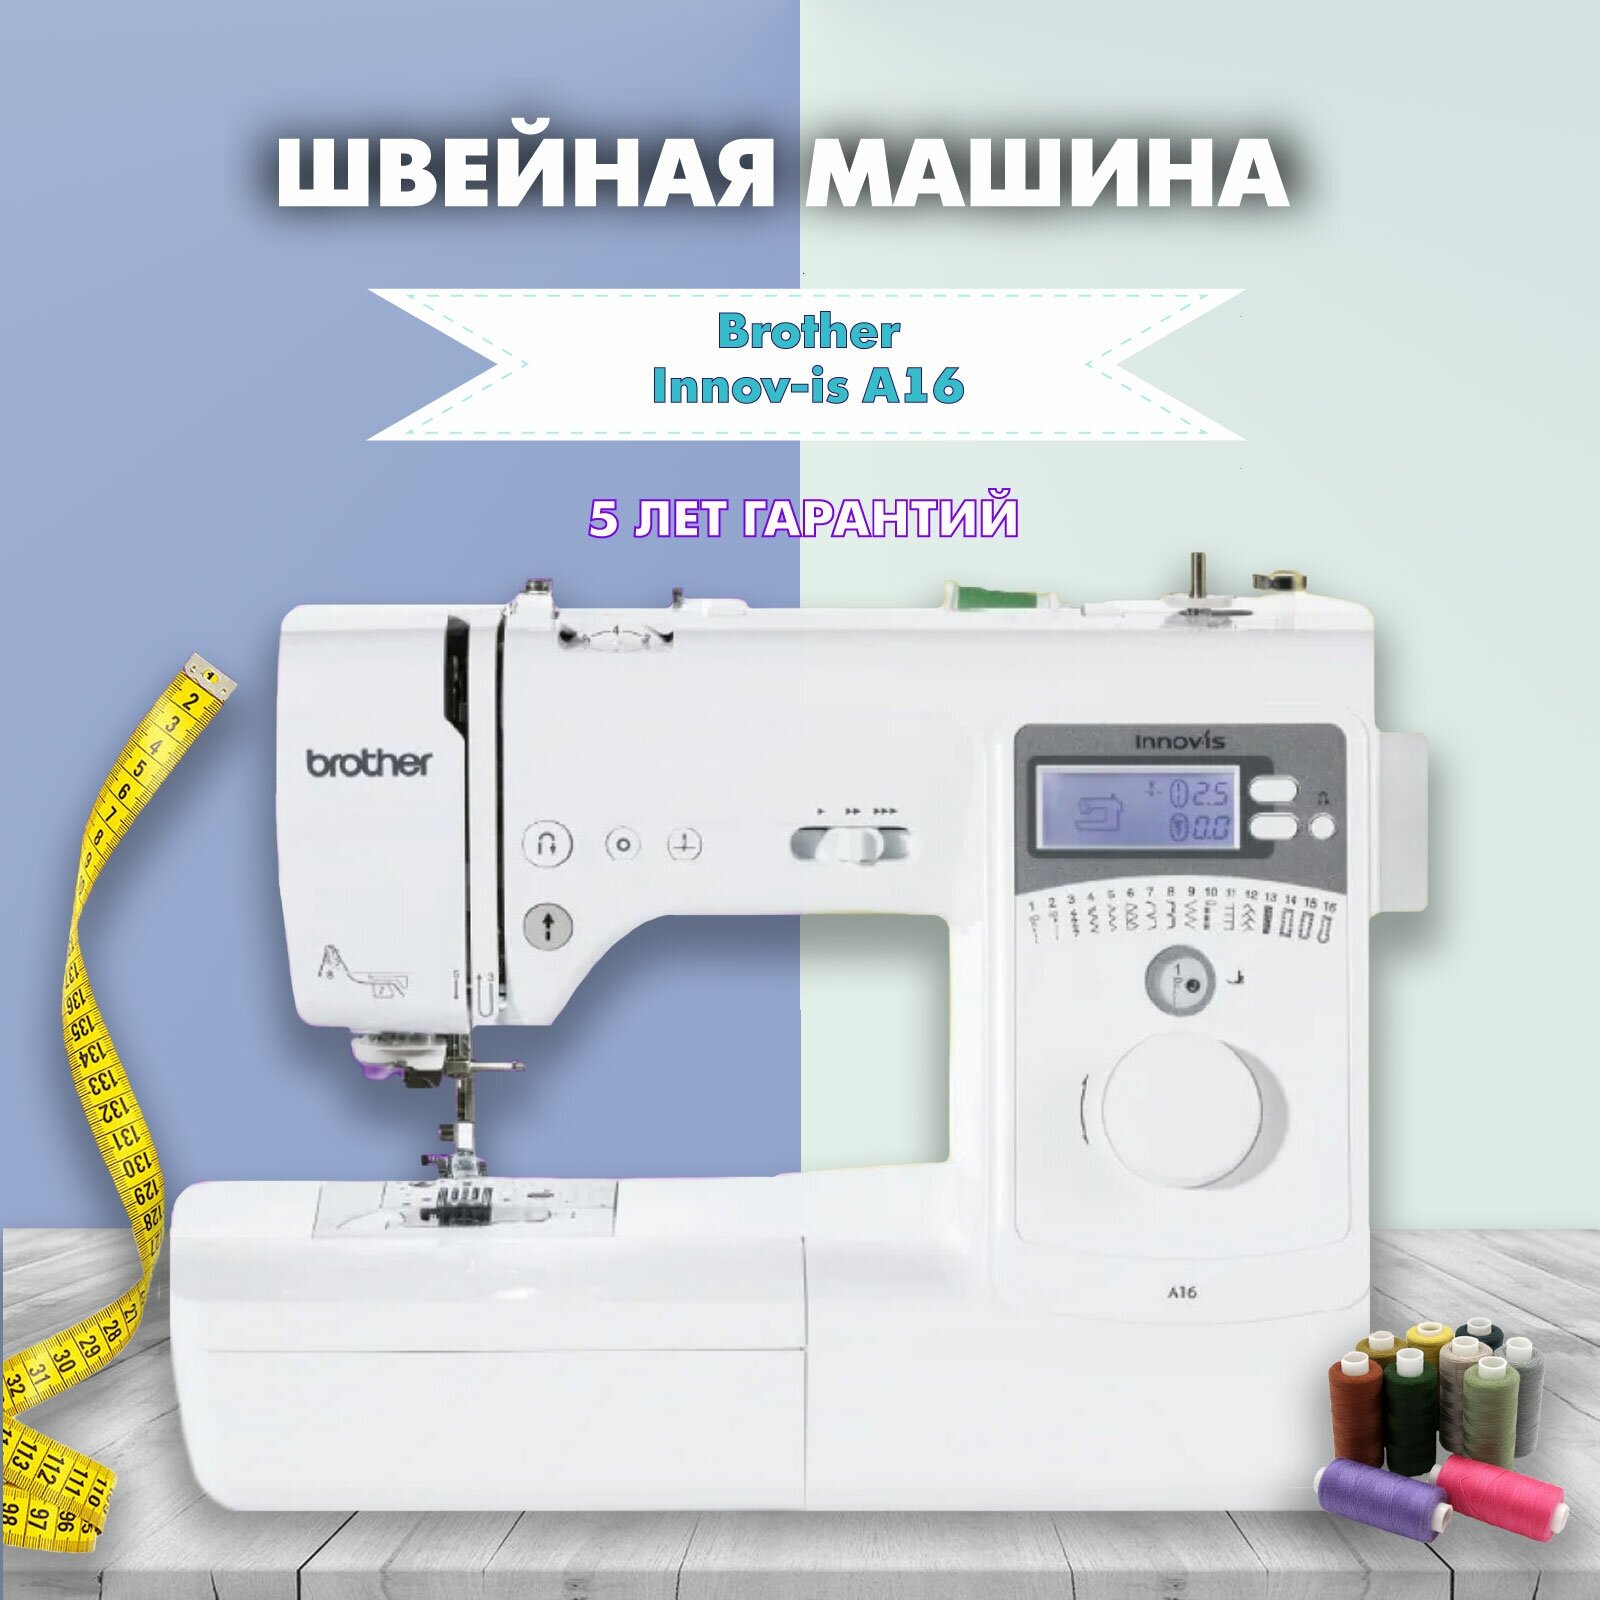 Швейная машина Brother Innov-is NV A 16